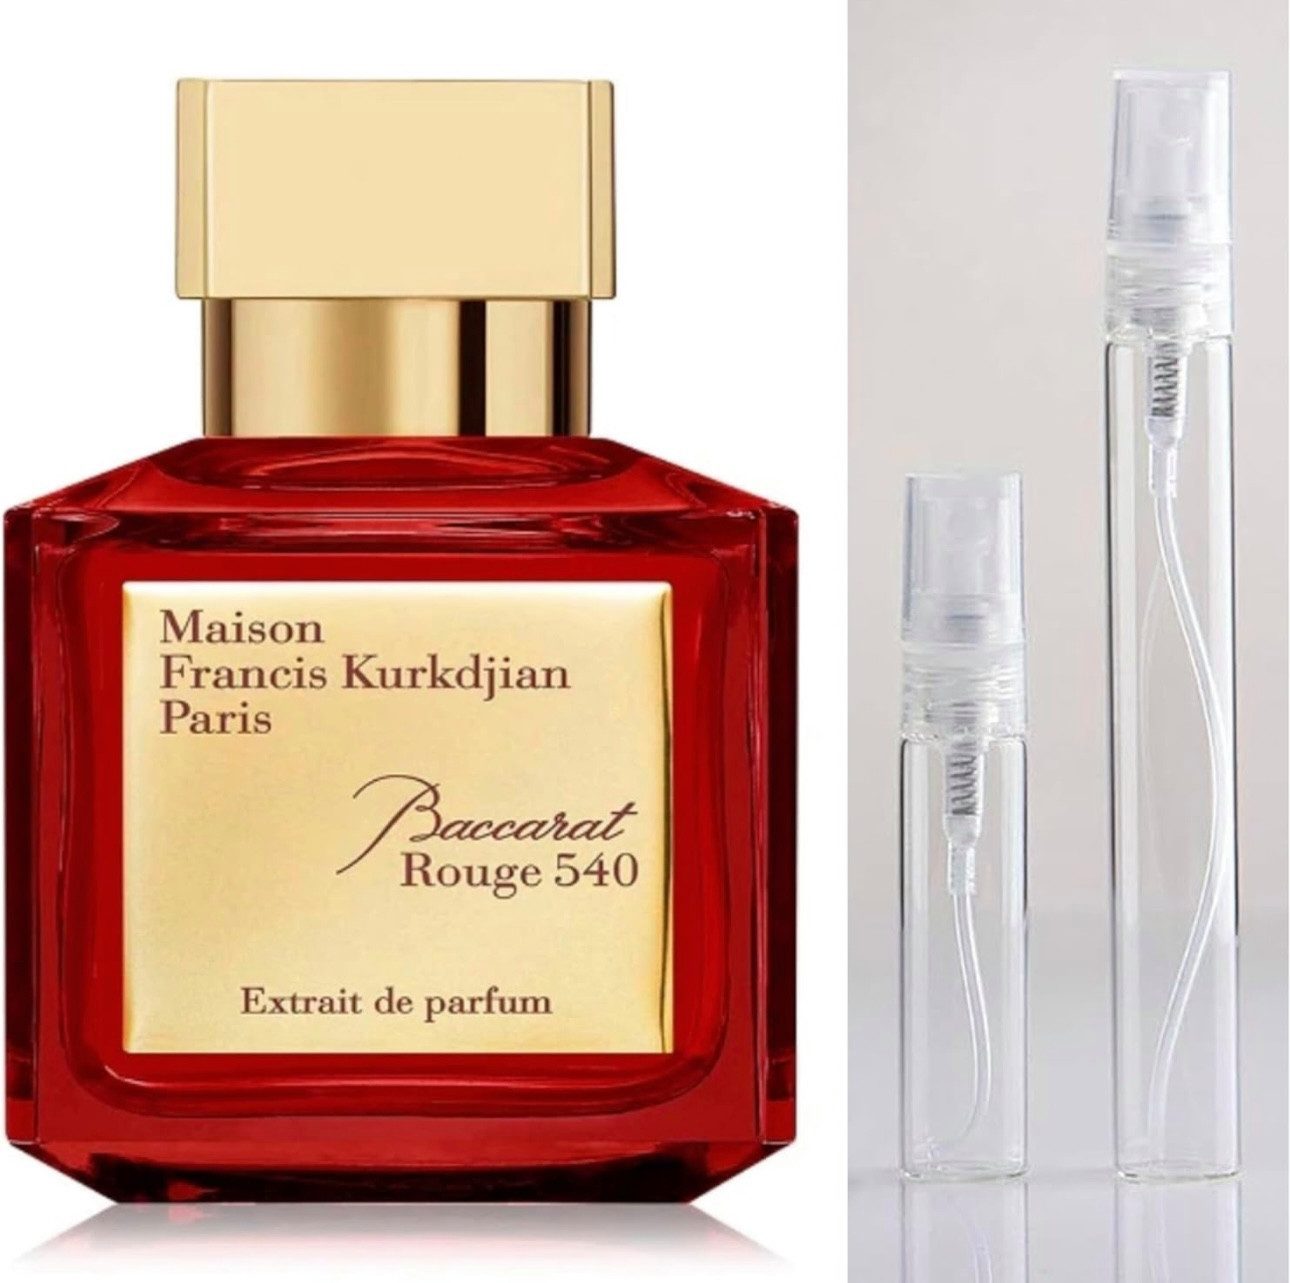 Maison Francis Kurkdjian Extrait Parfum Baccarat Rouge 540 - 5ml - Duftprobe, Langanhaltender Duft, Extrait de Parfum, Meisterwerk von Francjis